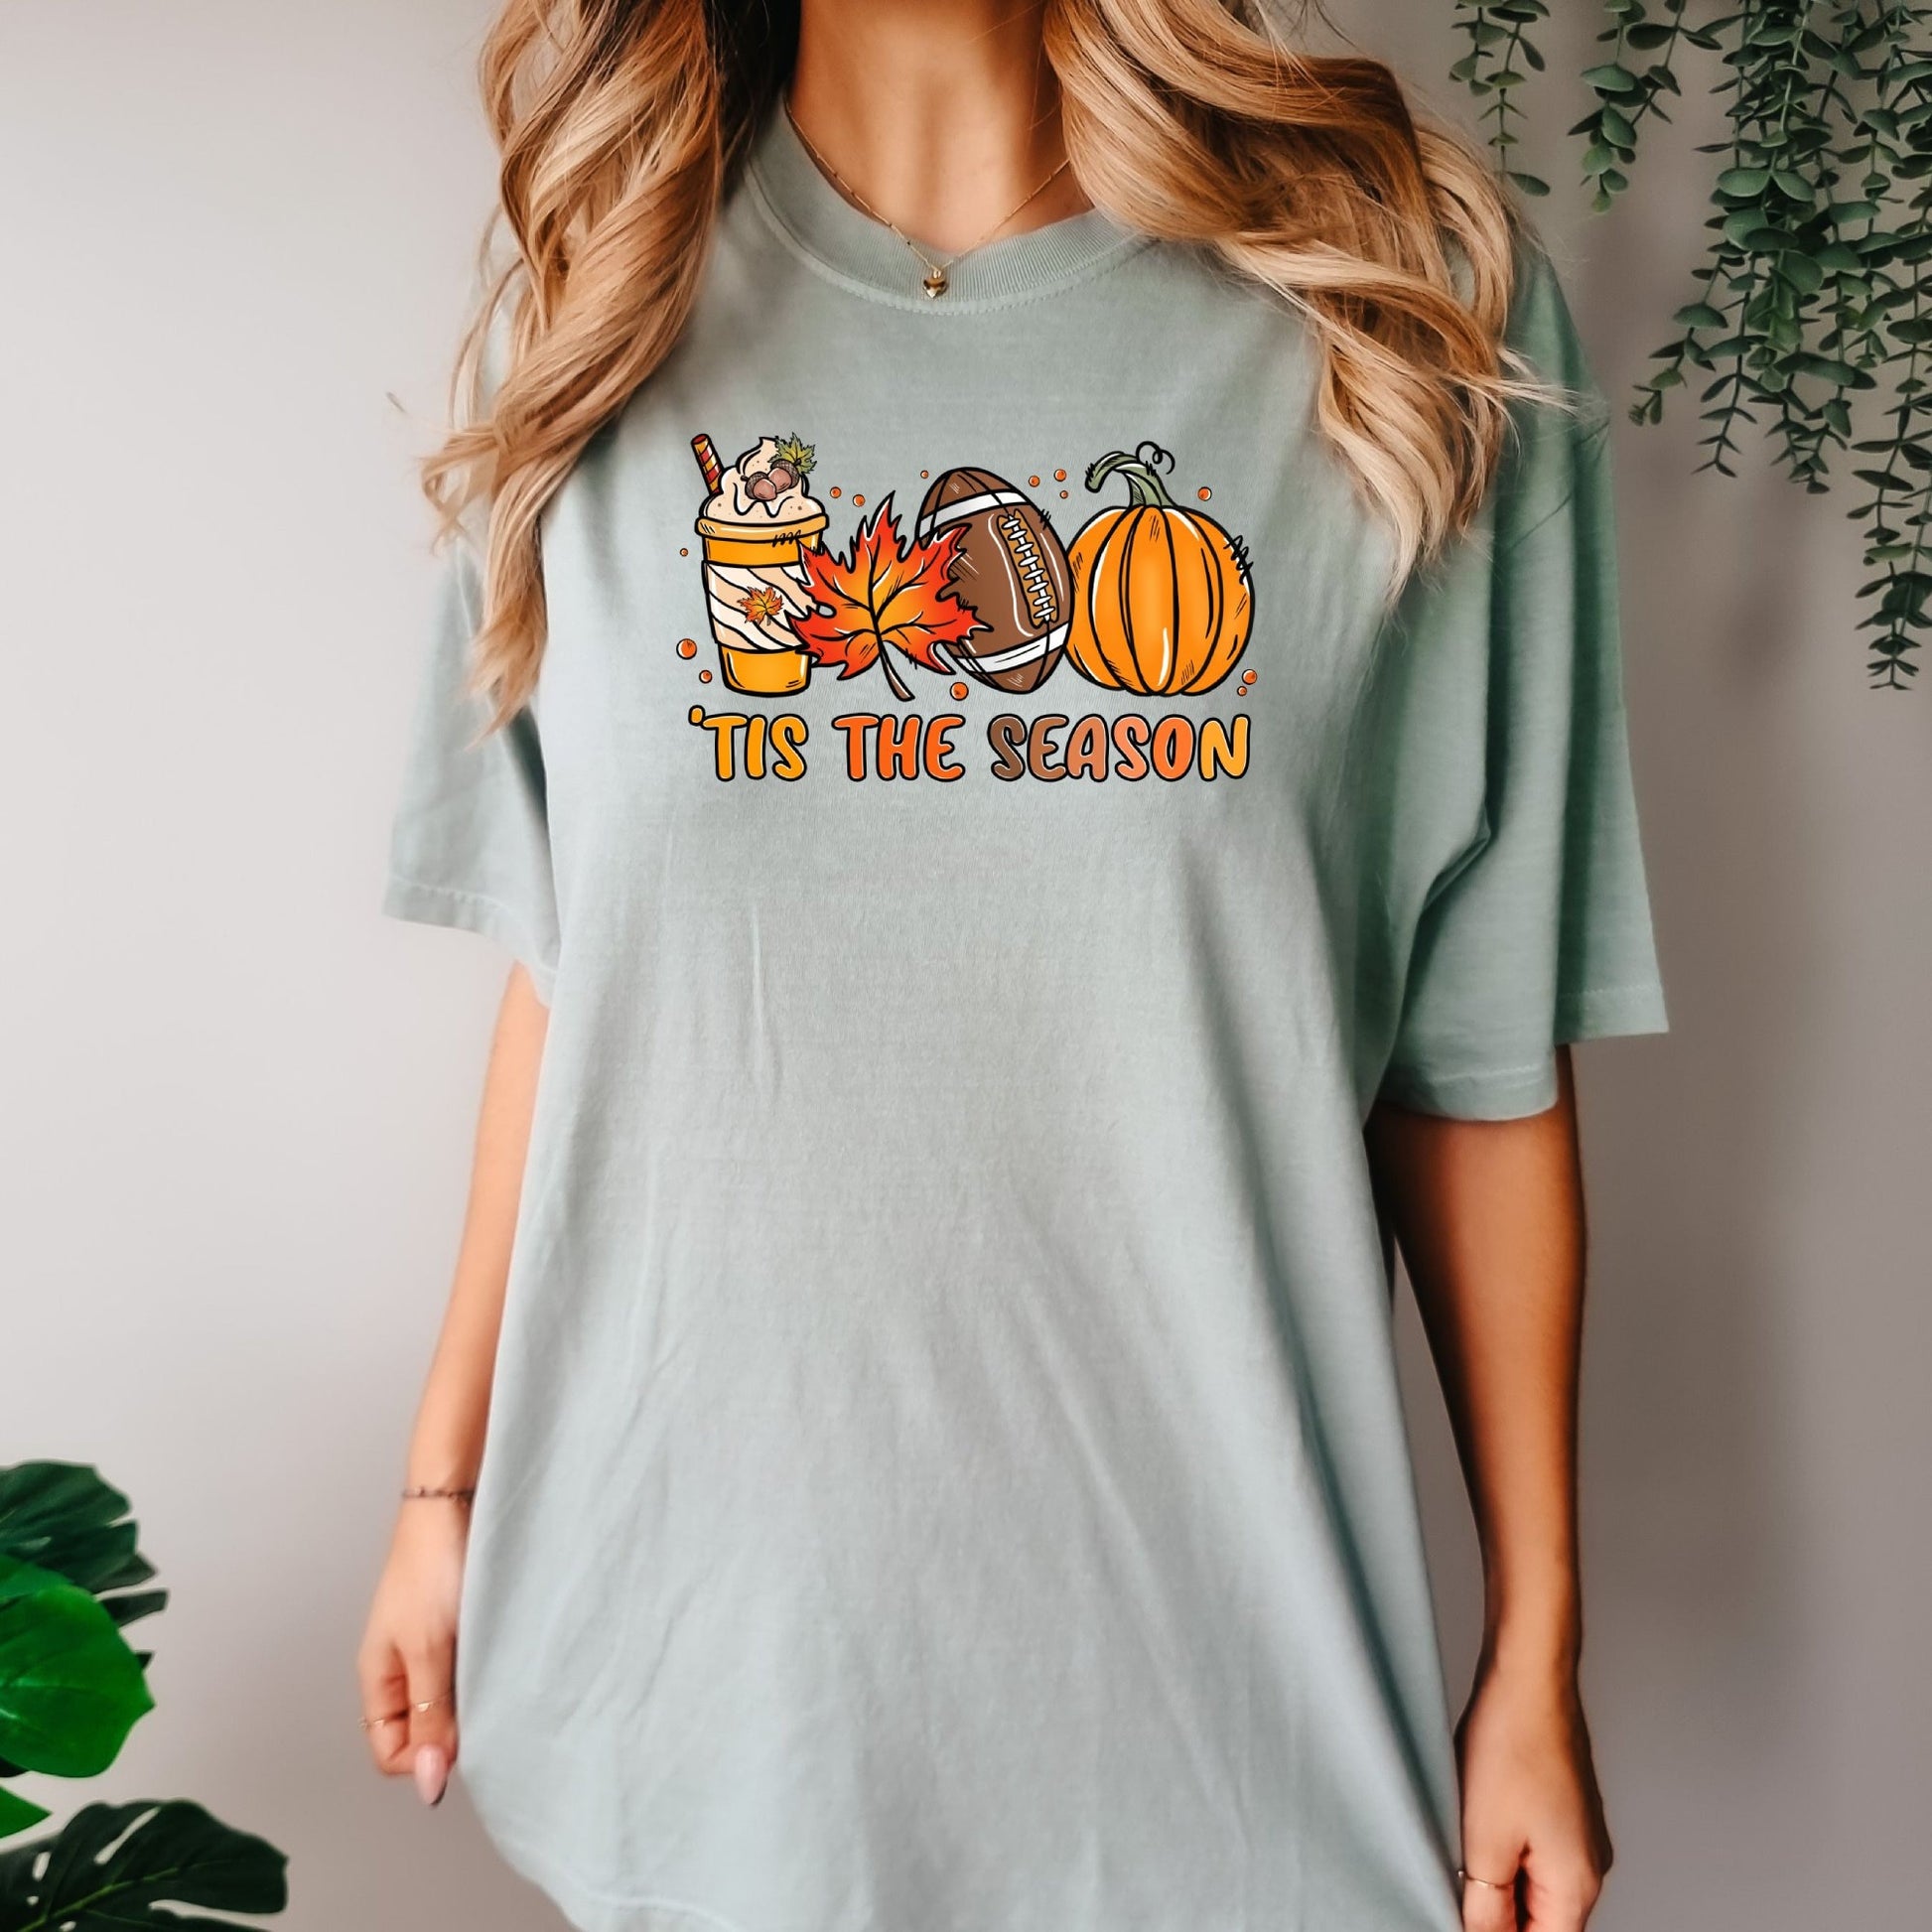 Women's Fall Shirt, Tis the Season Pumpkin Spice T-Shirt, Funny Halloween Tee, Cute Fall Shirt, Women's Fall Shirt, Plus Size Fall Shirt